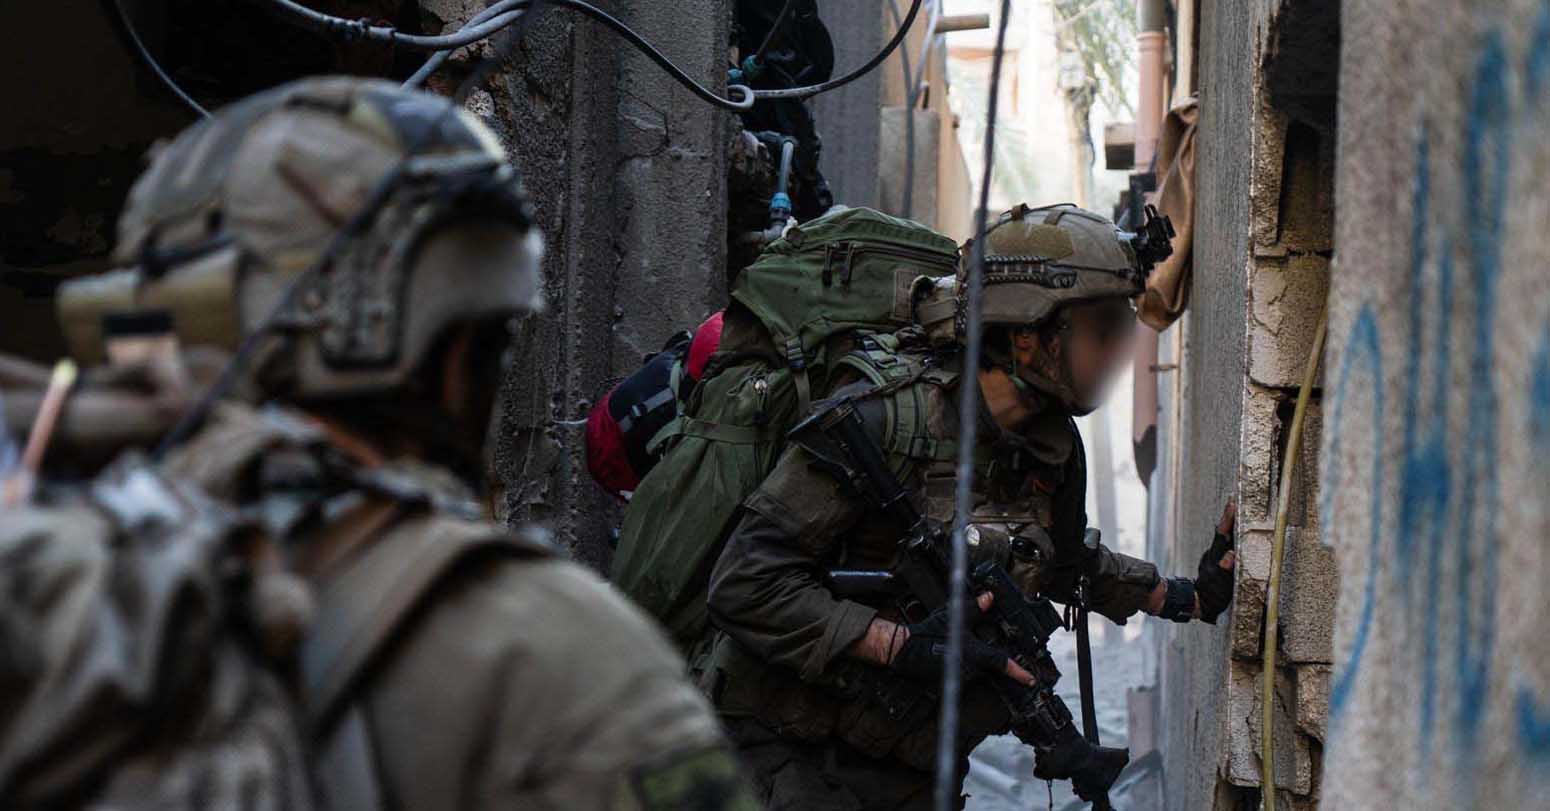 Israel 'Moving Ahead' With Rafah Operation In Gaza Despite International Outcry